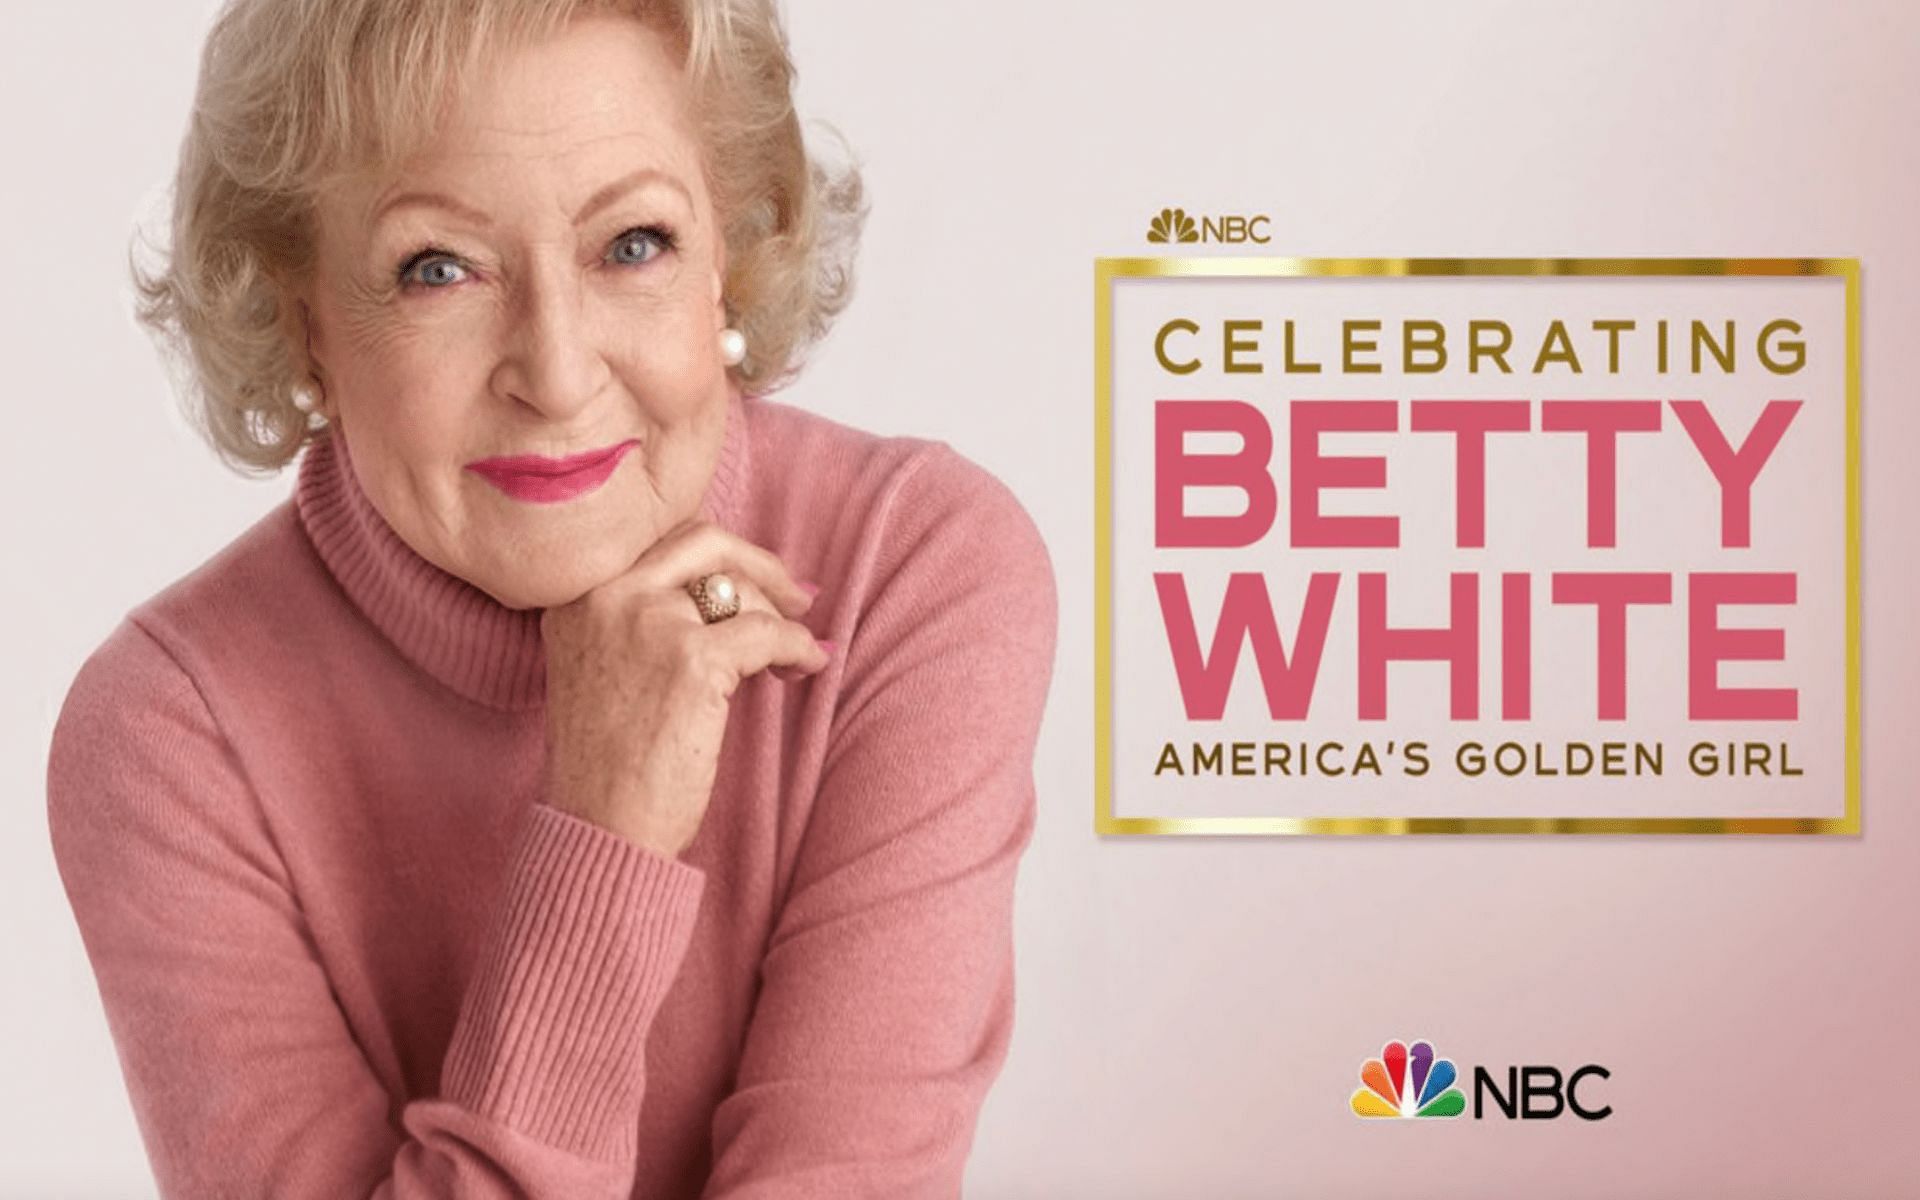 NBC&#039;s Official poster for Celebrating Betty White: America&#039;s Golden Girl (Image via NBC)